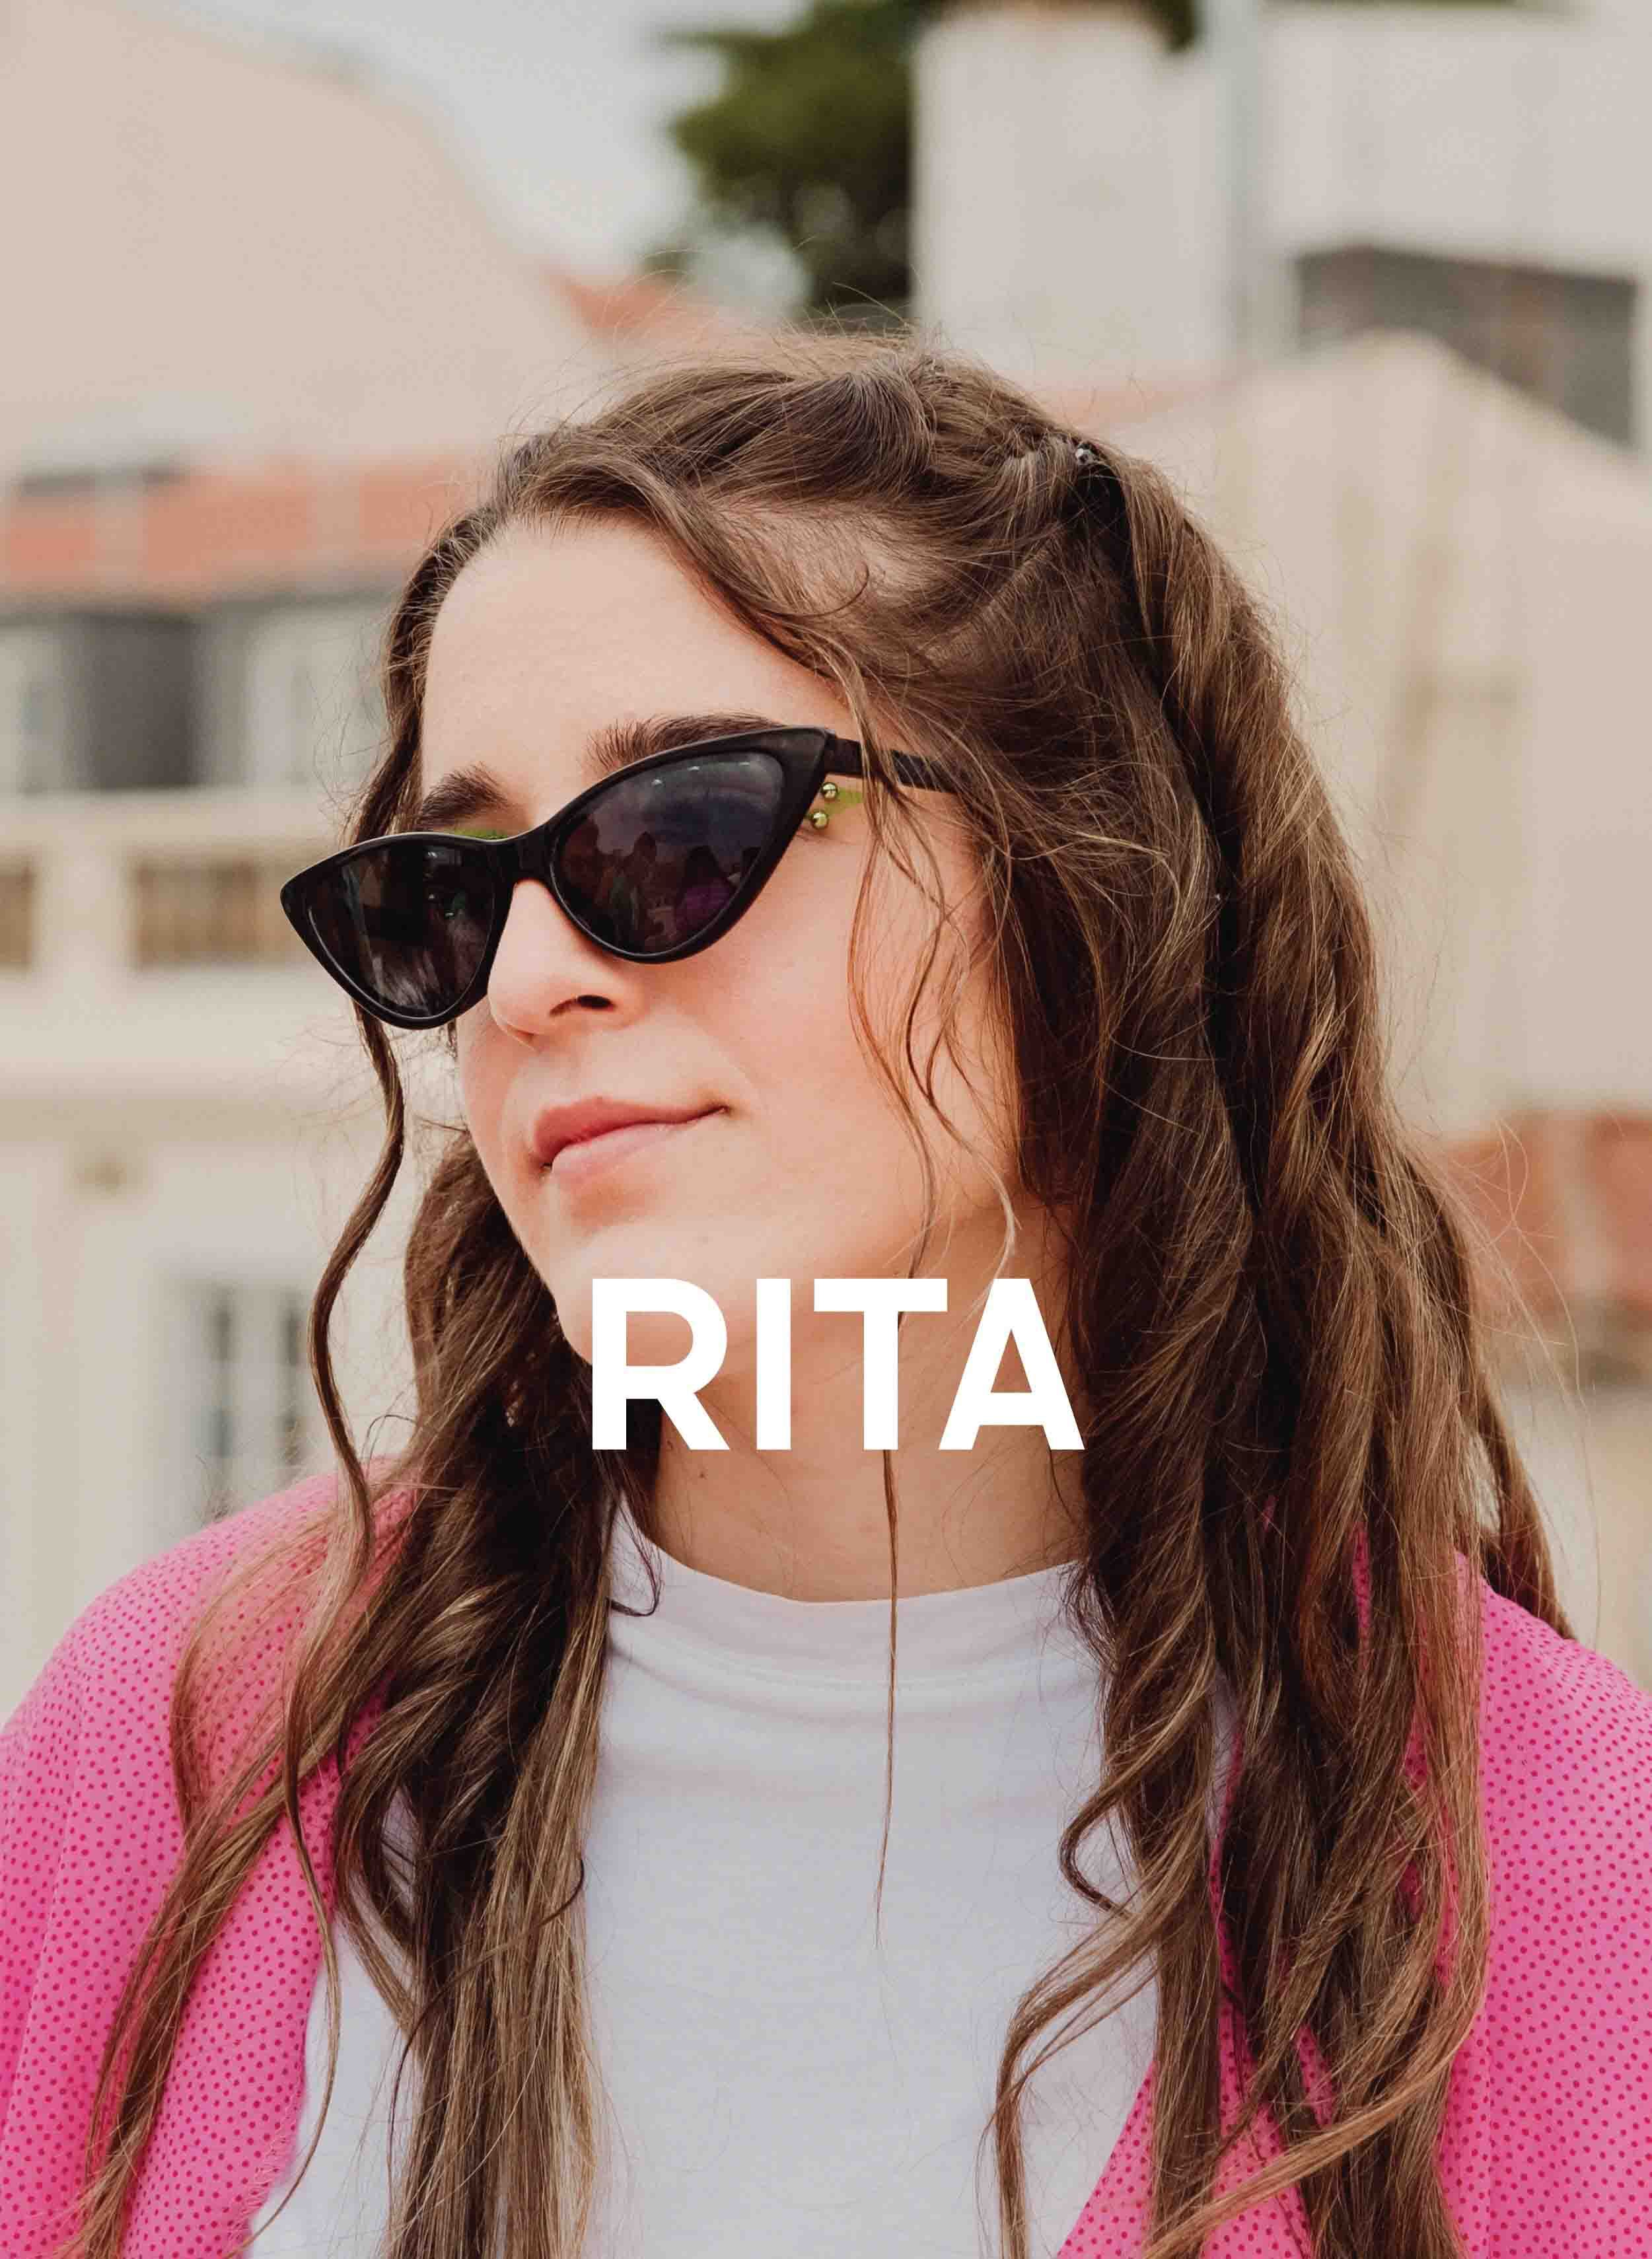 Una imagen de Rita.